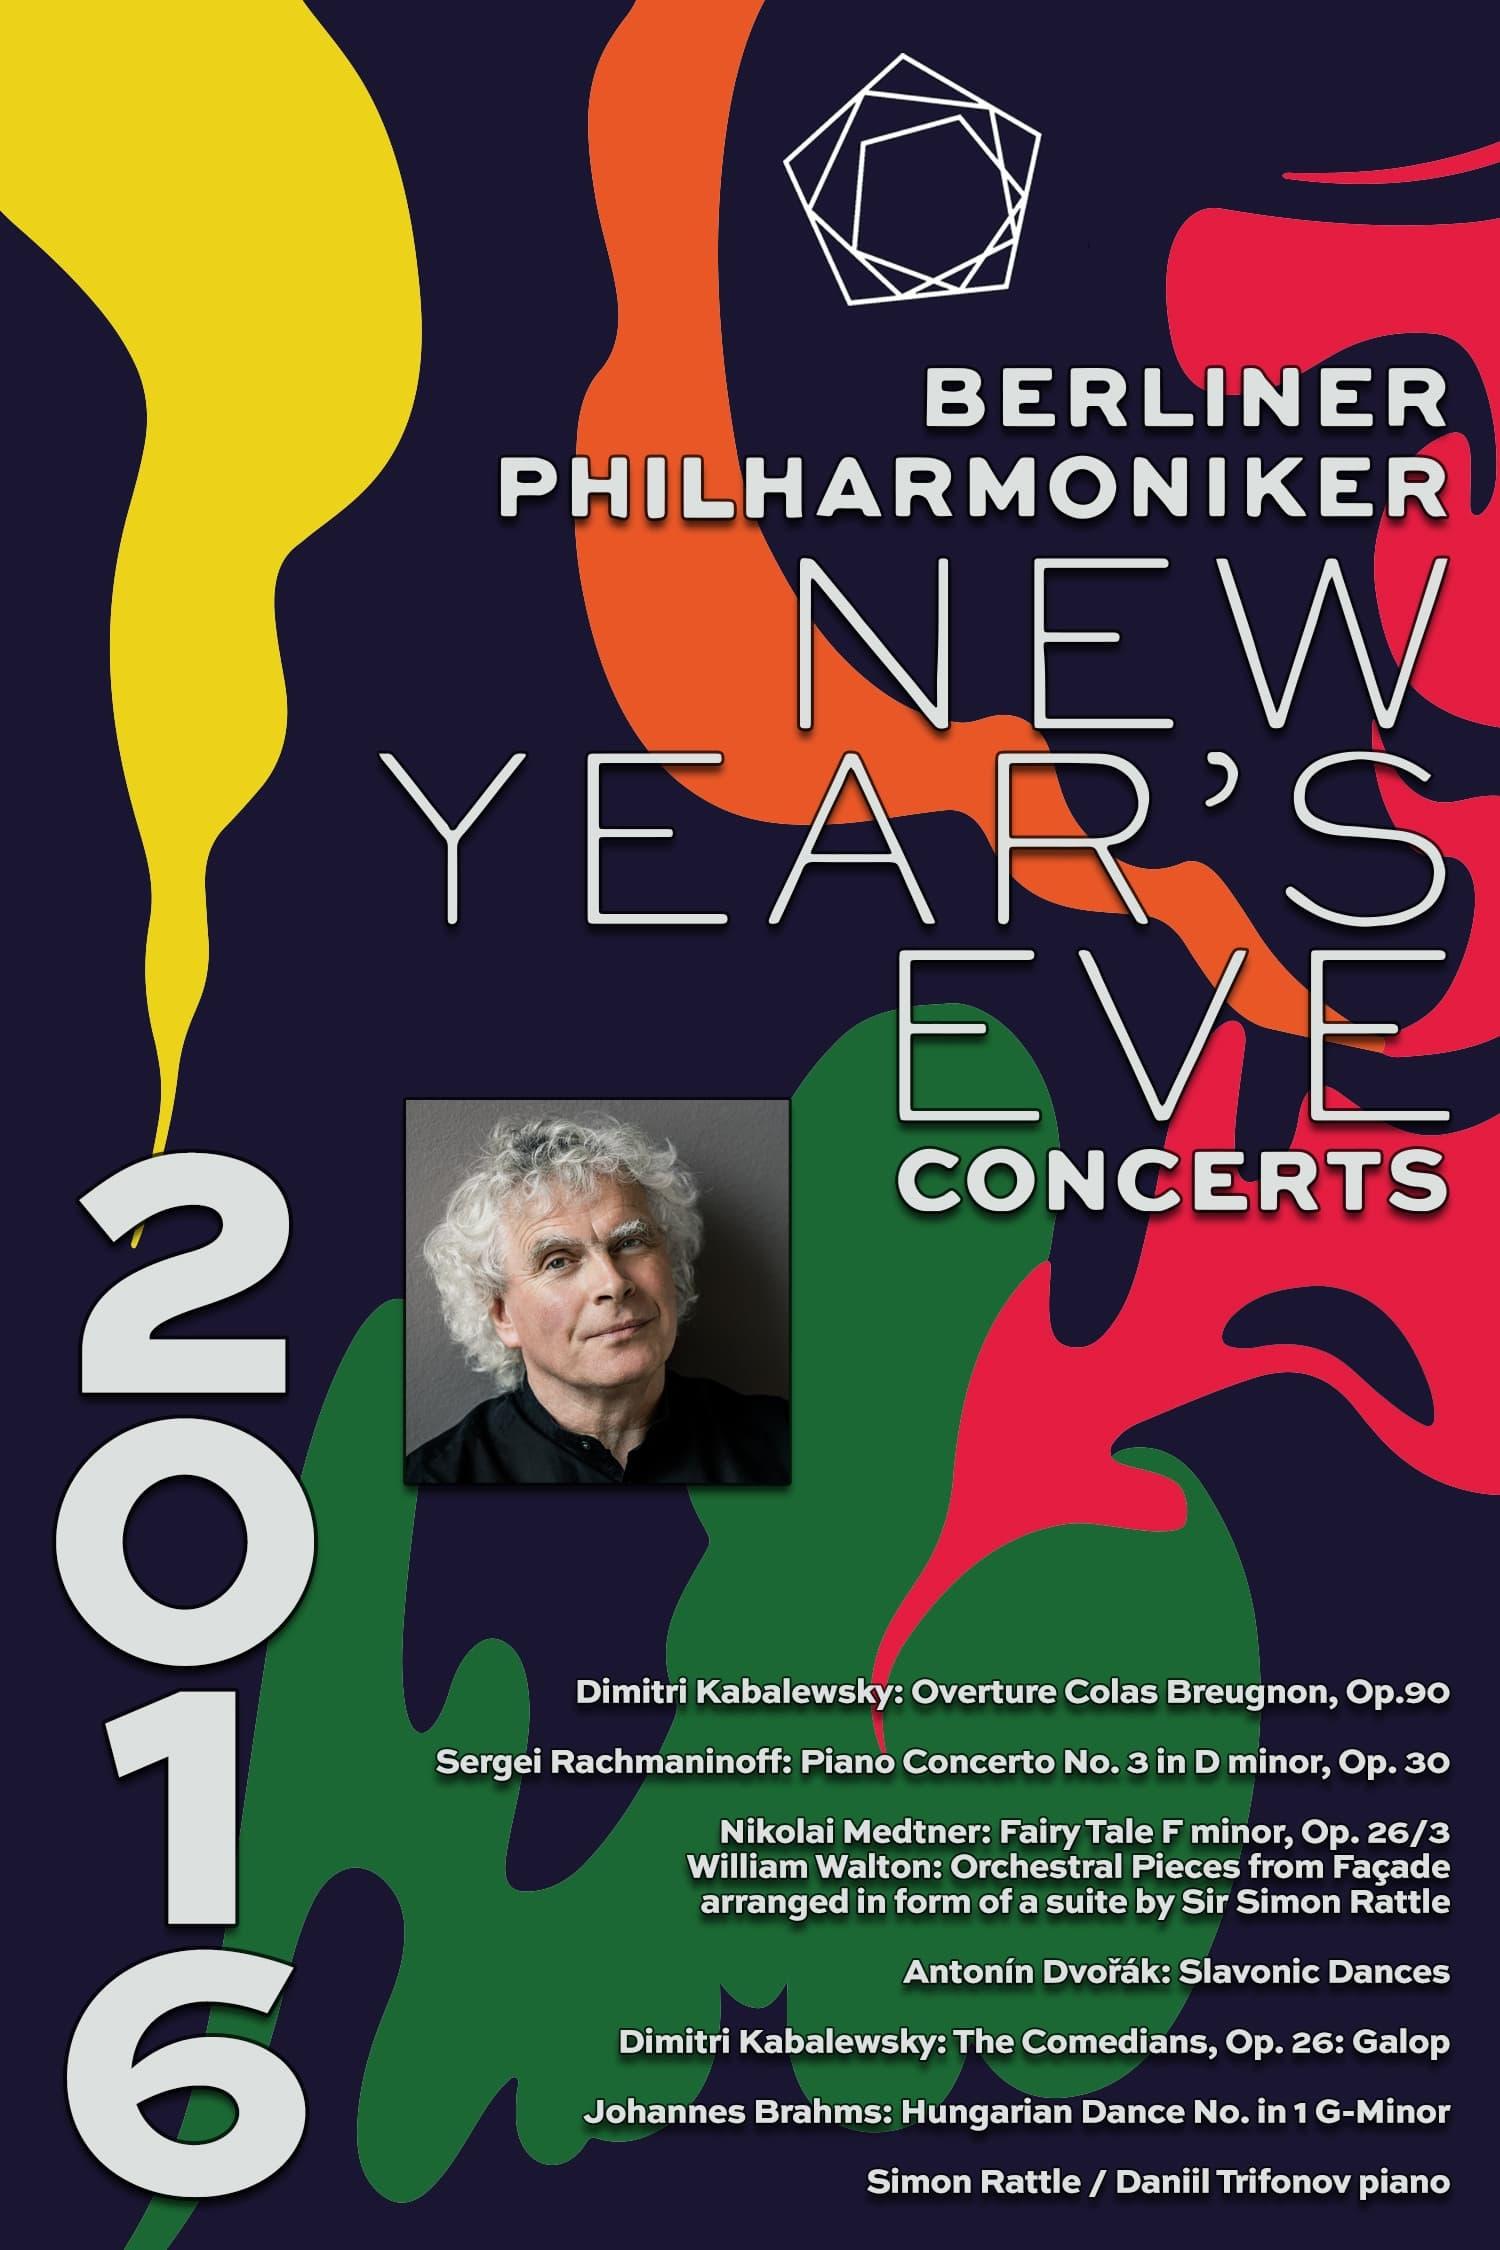 The Berliner Philharmoniker’s New Year’s Eve Concert: 2016 poster